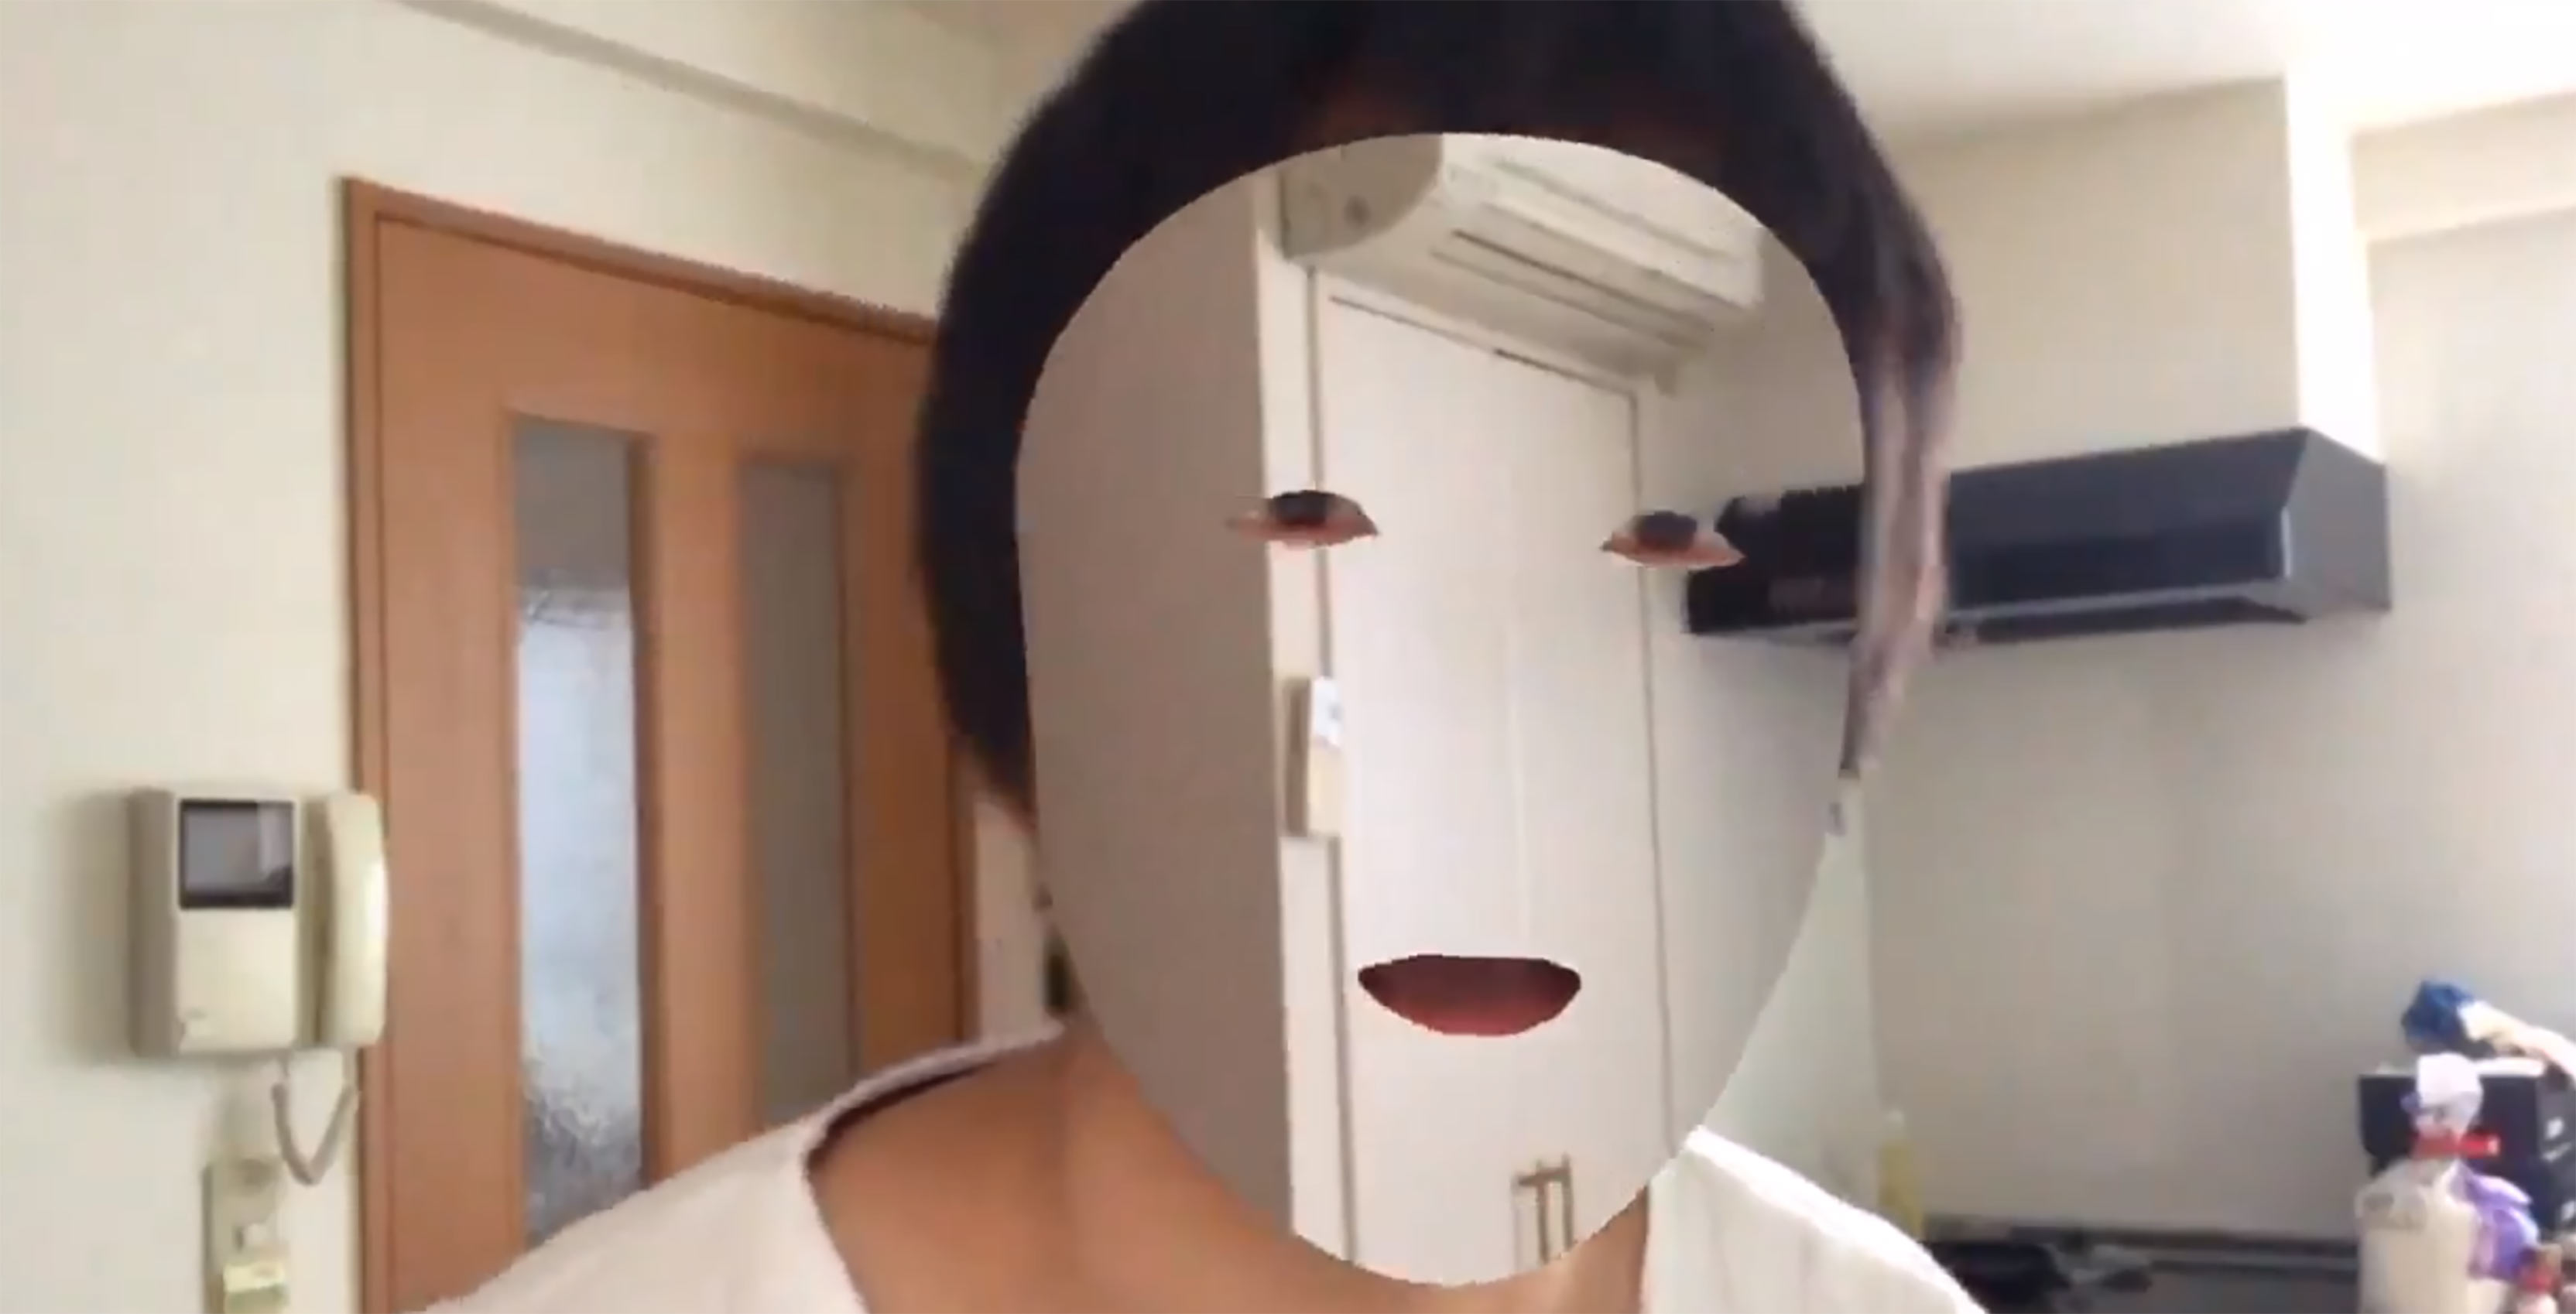 App that hides faces developed by Kazuya Noshiro